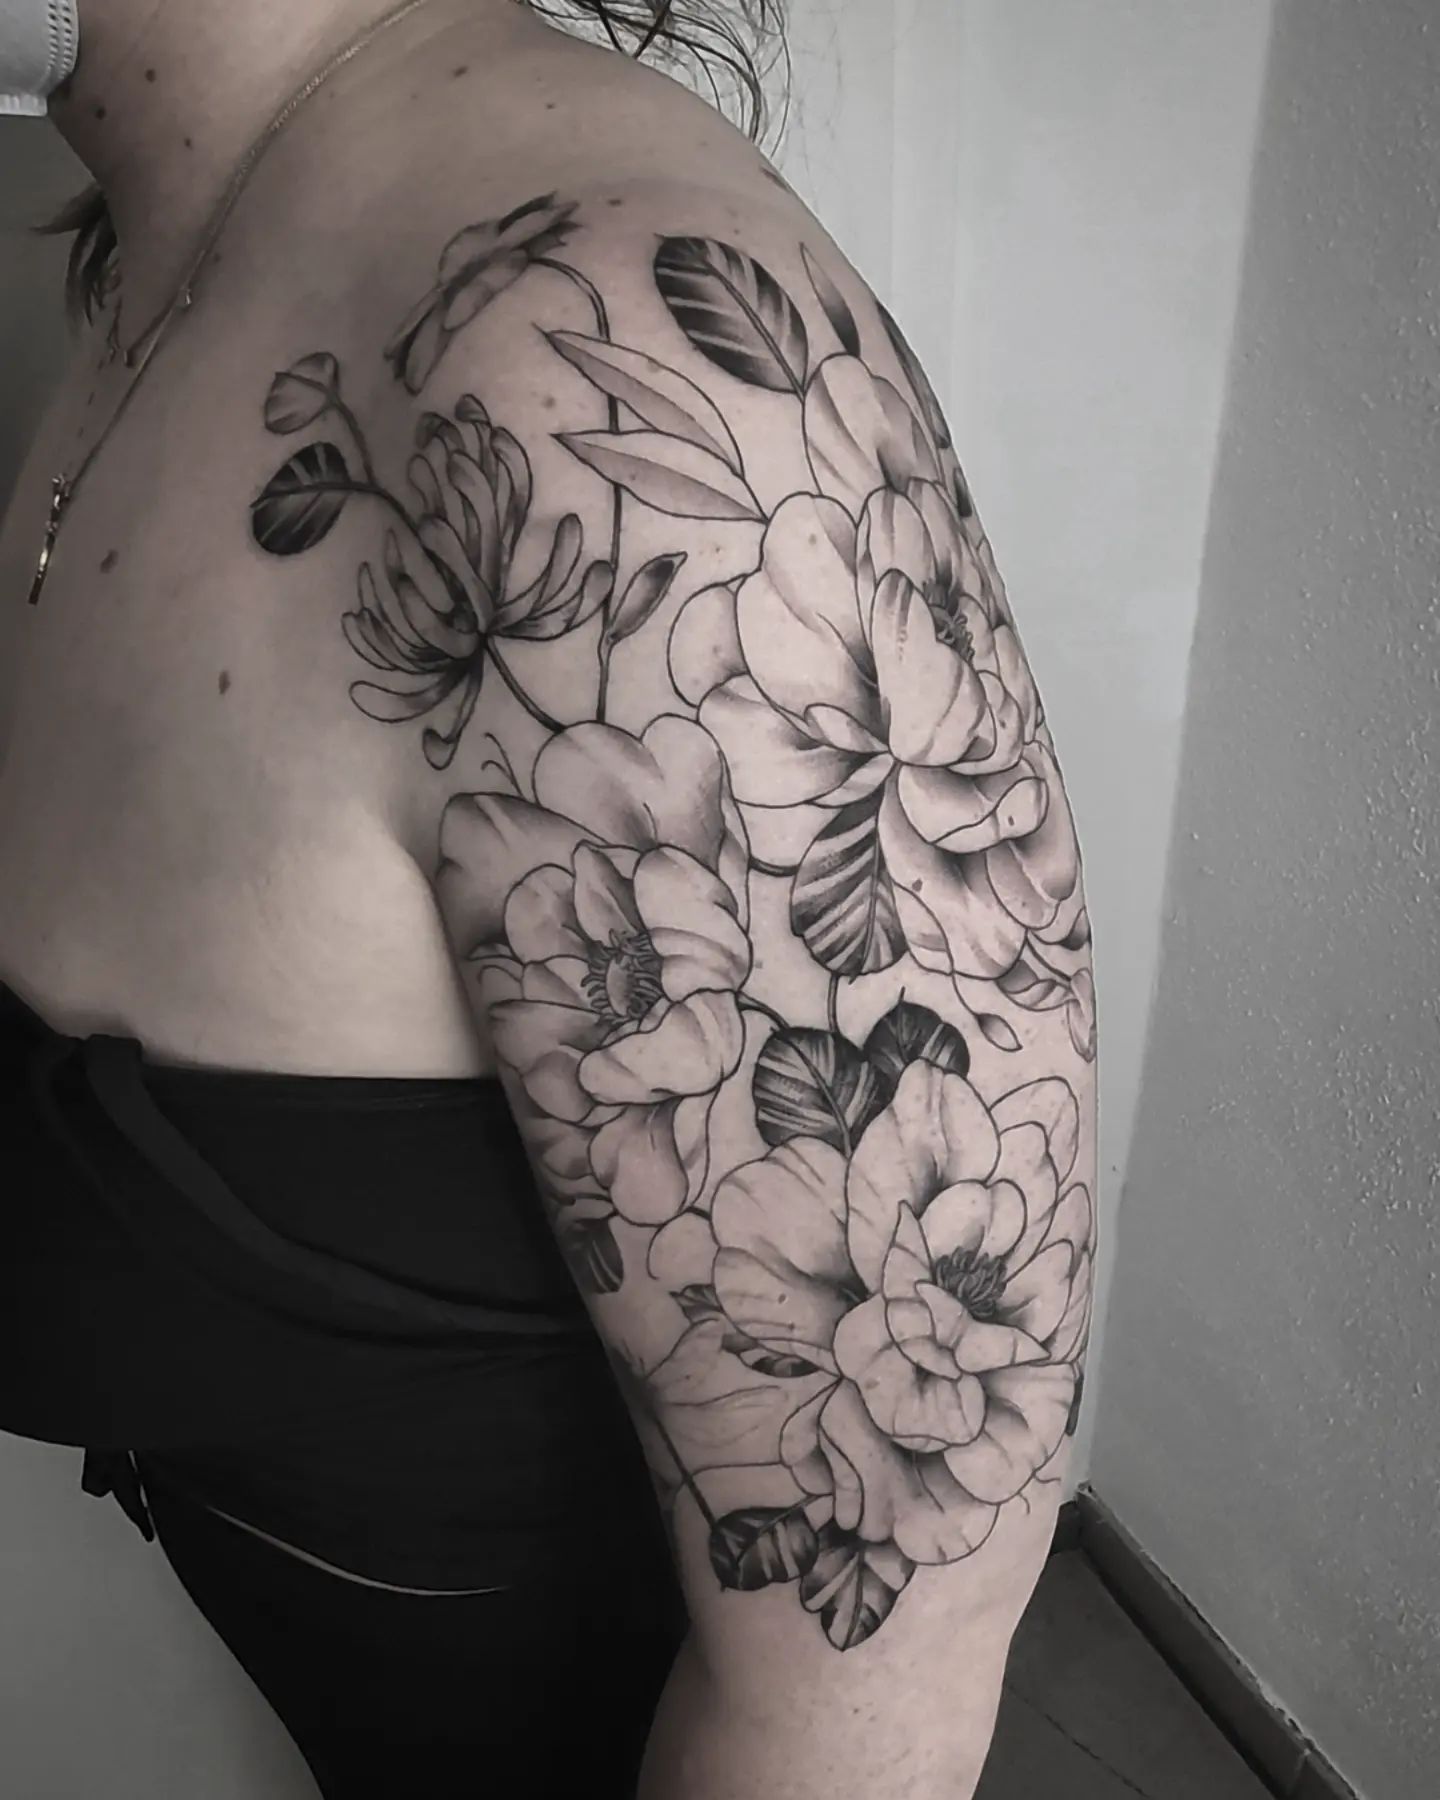 Flowers for homegirl @staemlee 
.
.
.
.
#tattoo #tattoos #ink #inked #art #tatto